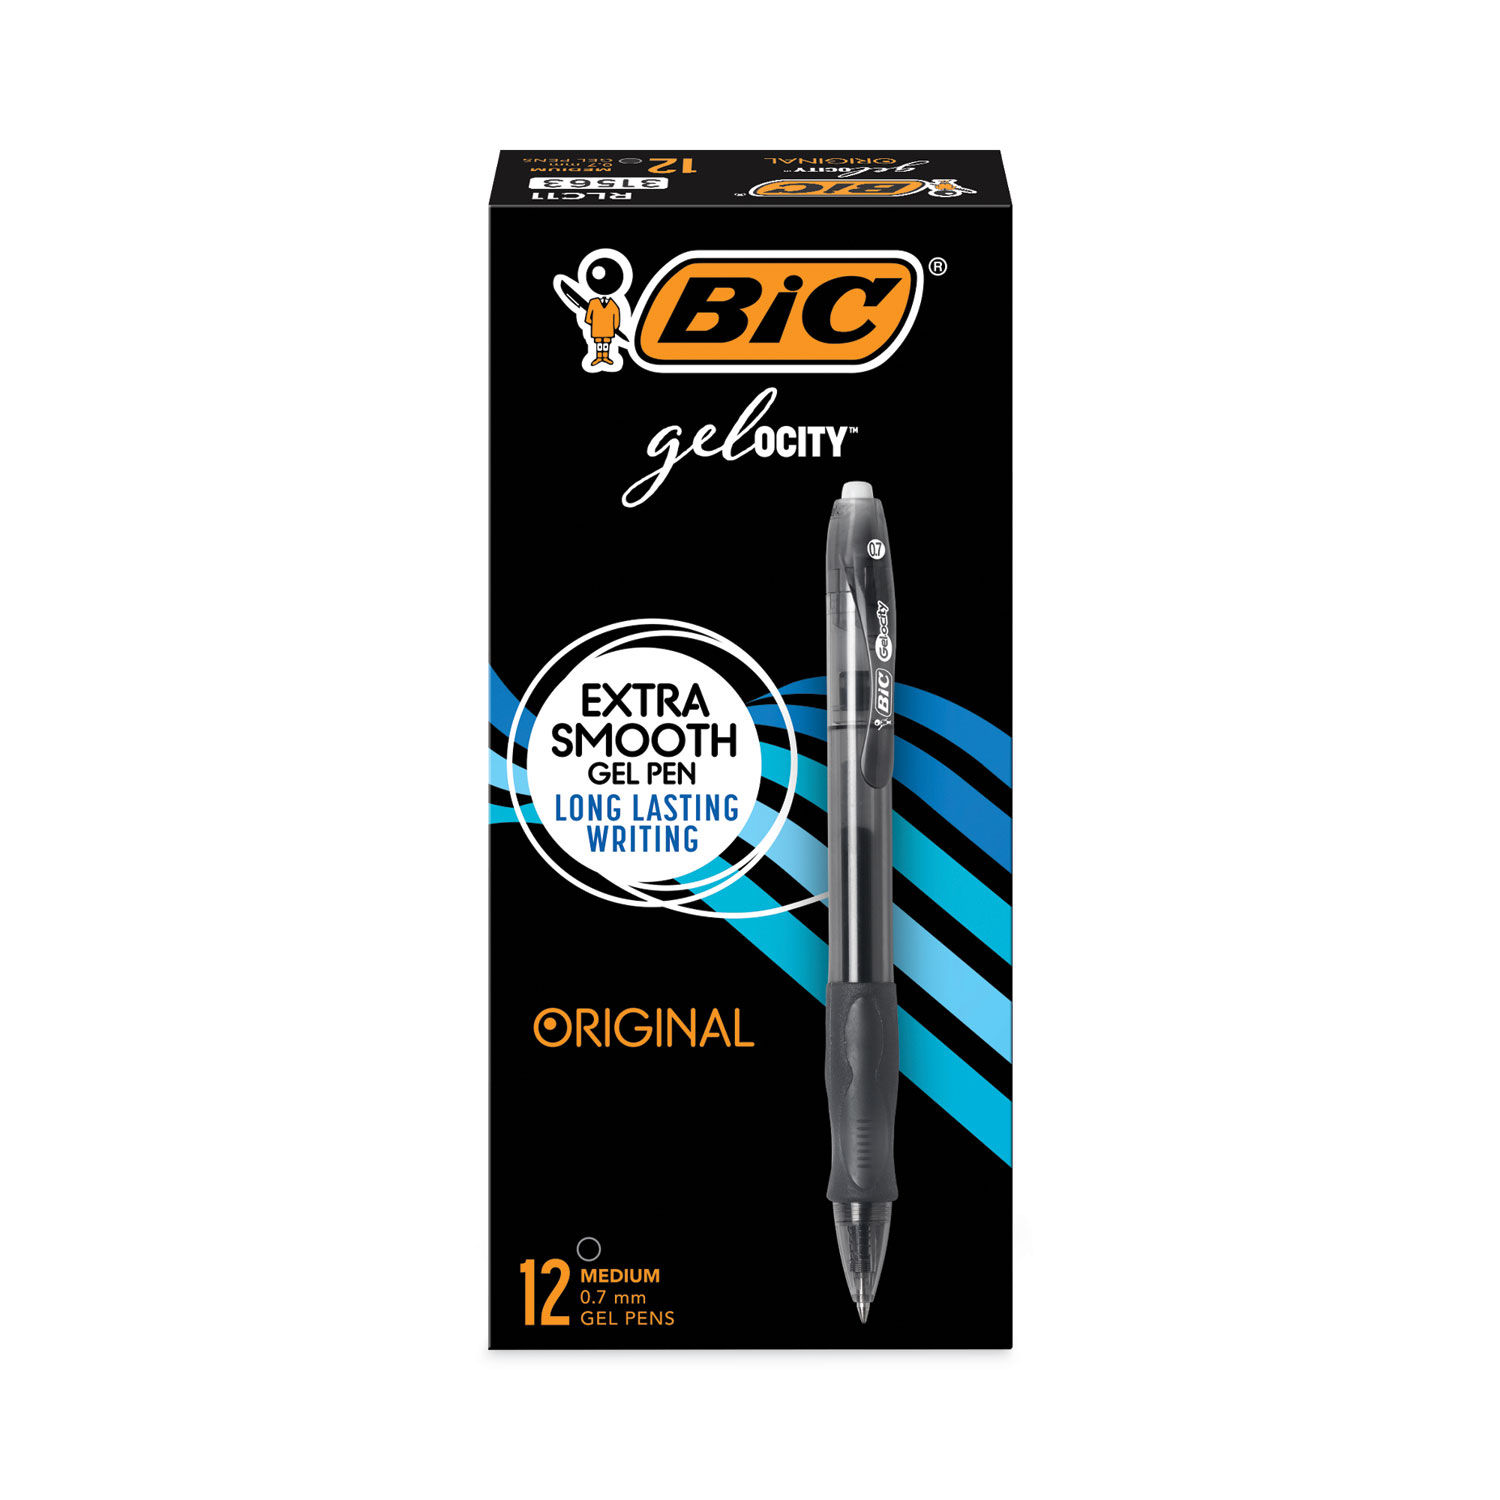 Gel-ocity Gel Pen by BICandreg; BICRLC11BK